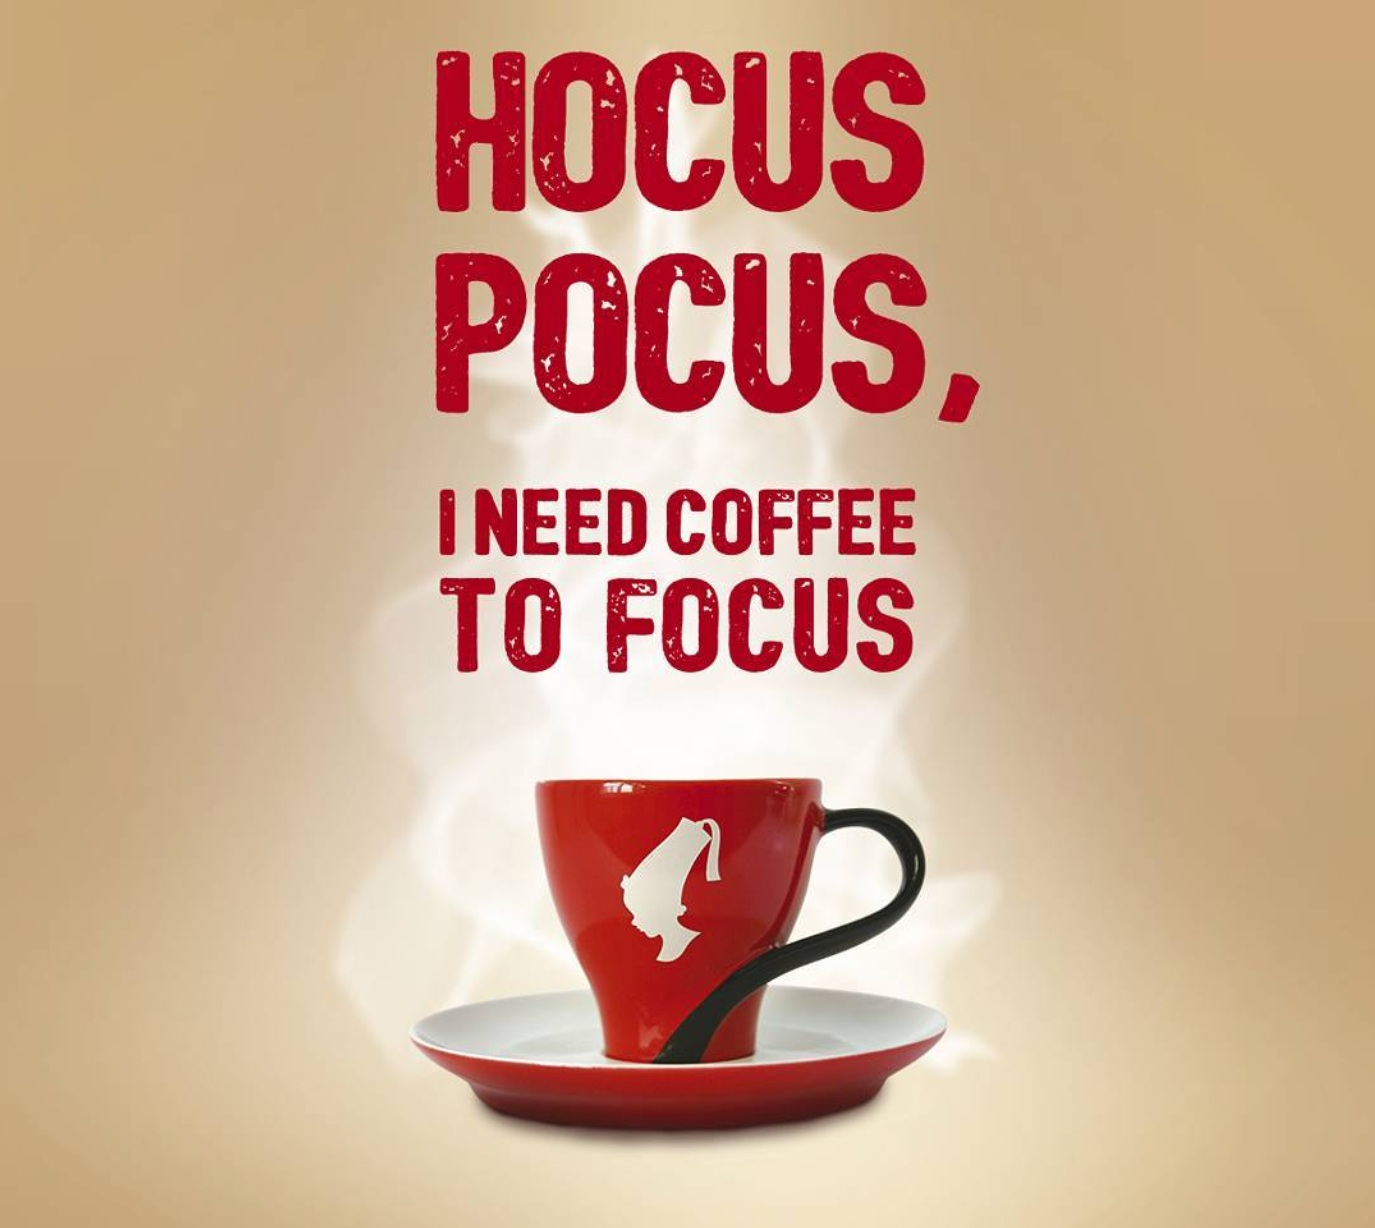 Hocus pocus, I need coffee to focus!